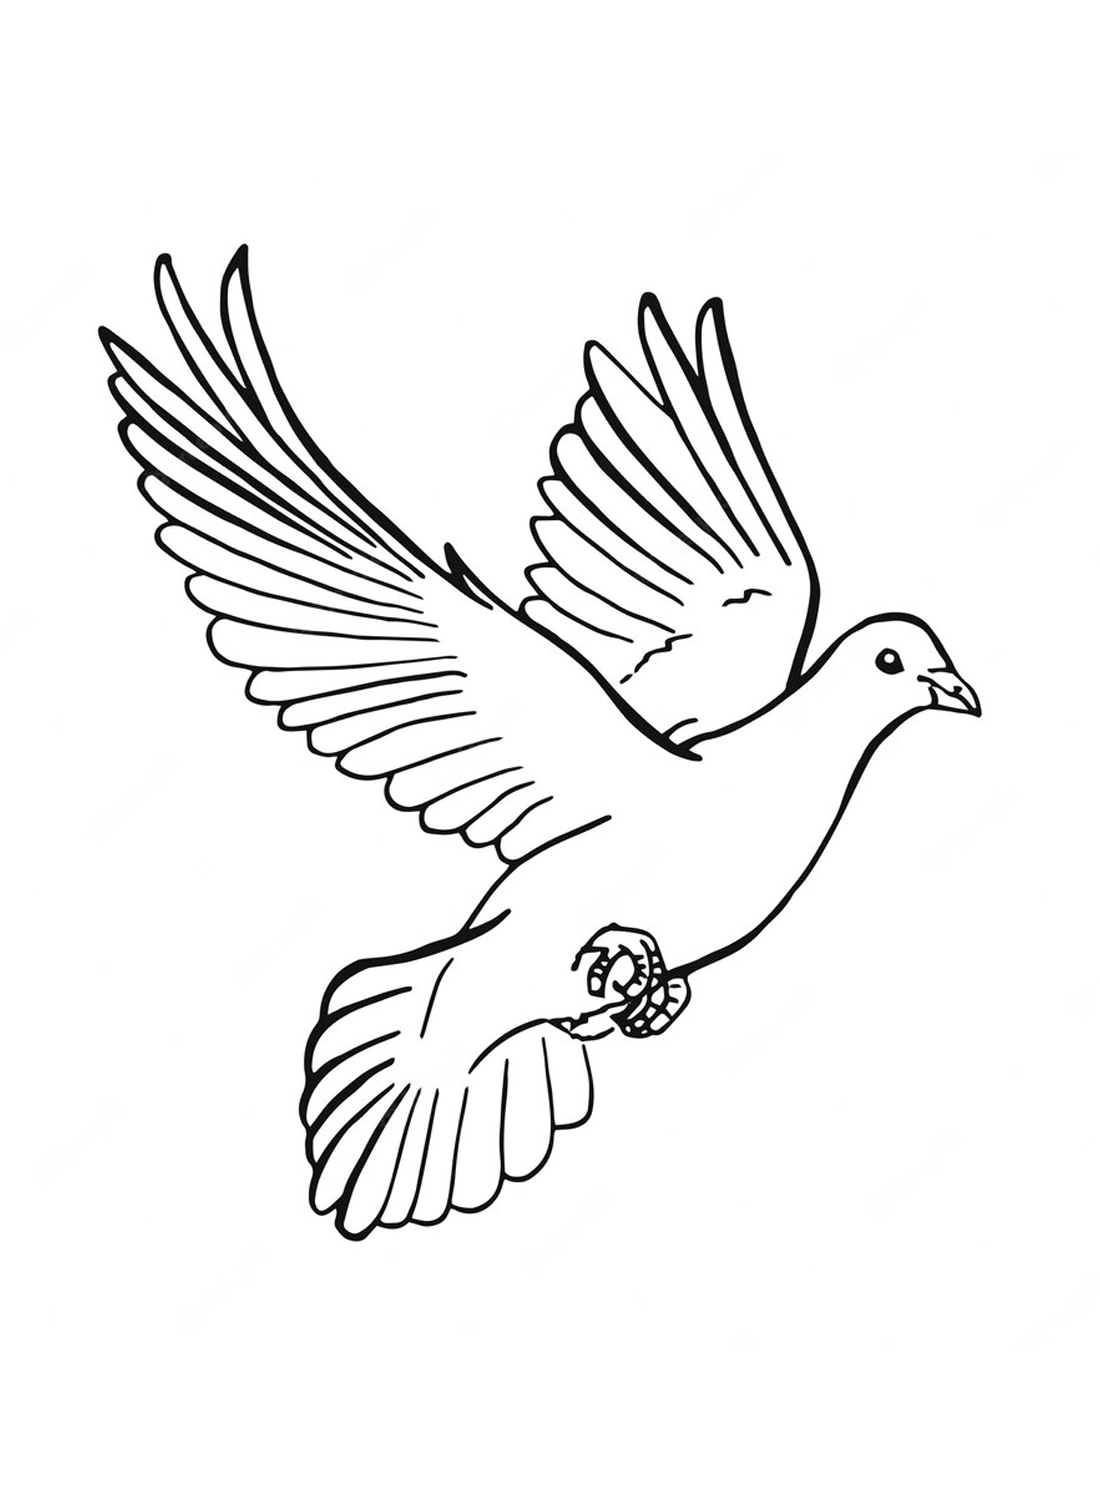 La paloma voladora de Doves